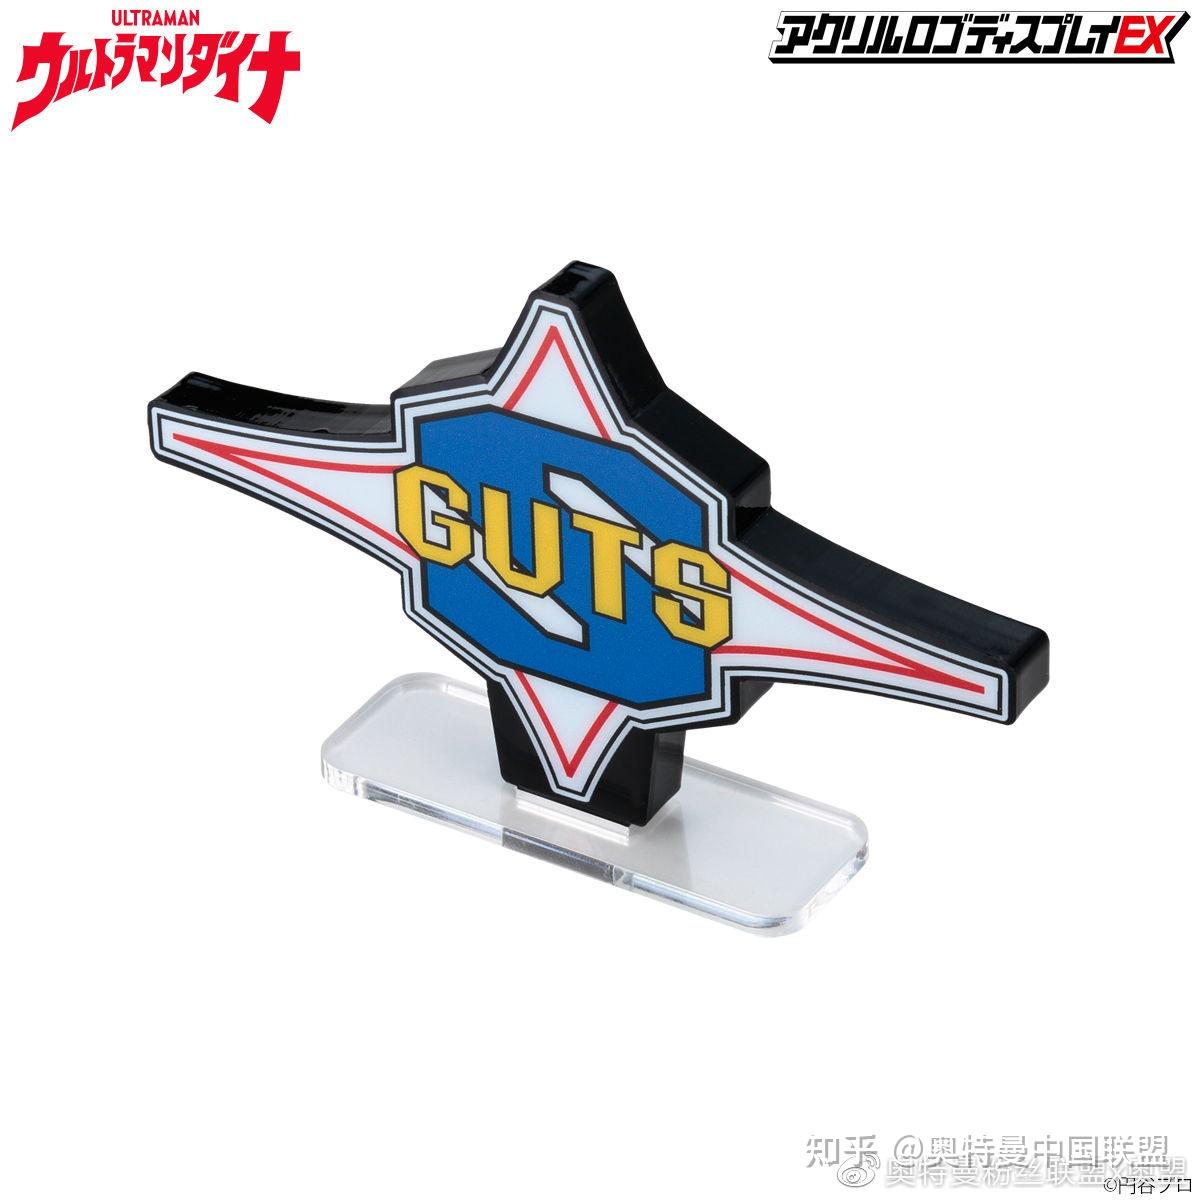 jp/item/item-1000157222/super guts 超级胜利队logo贩售,售价:1320